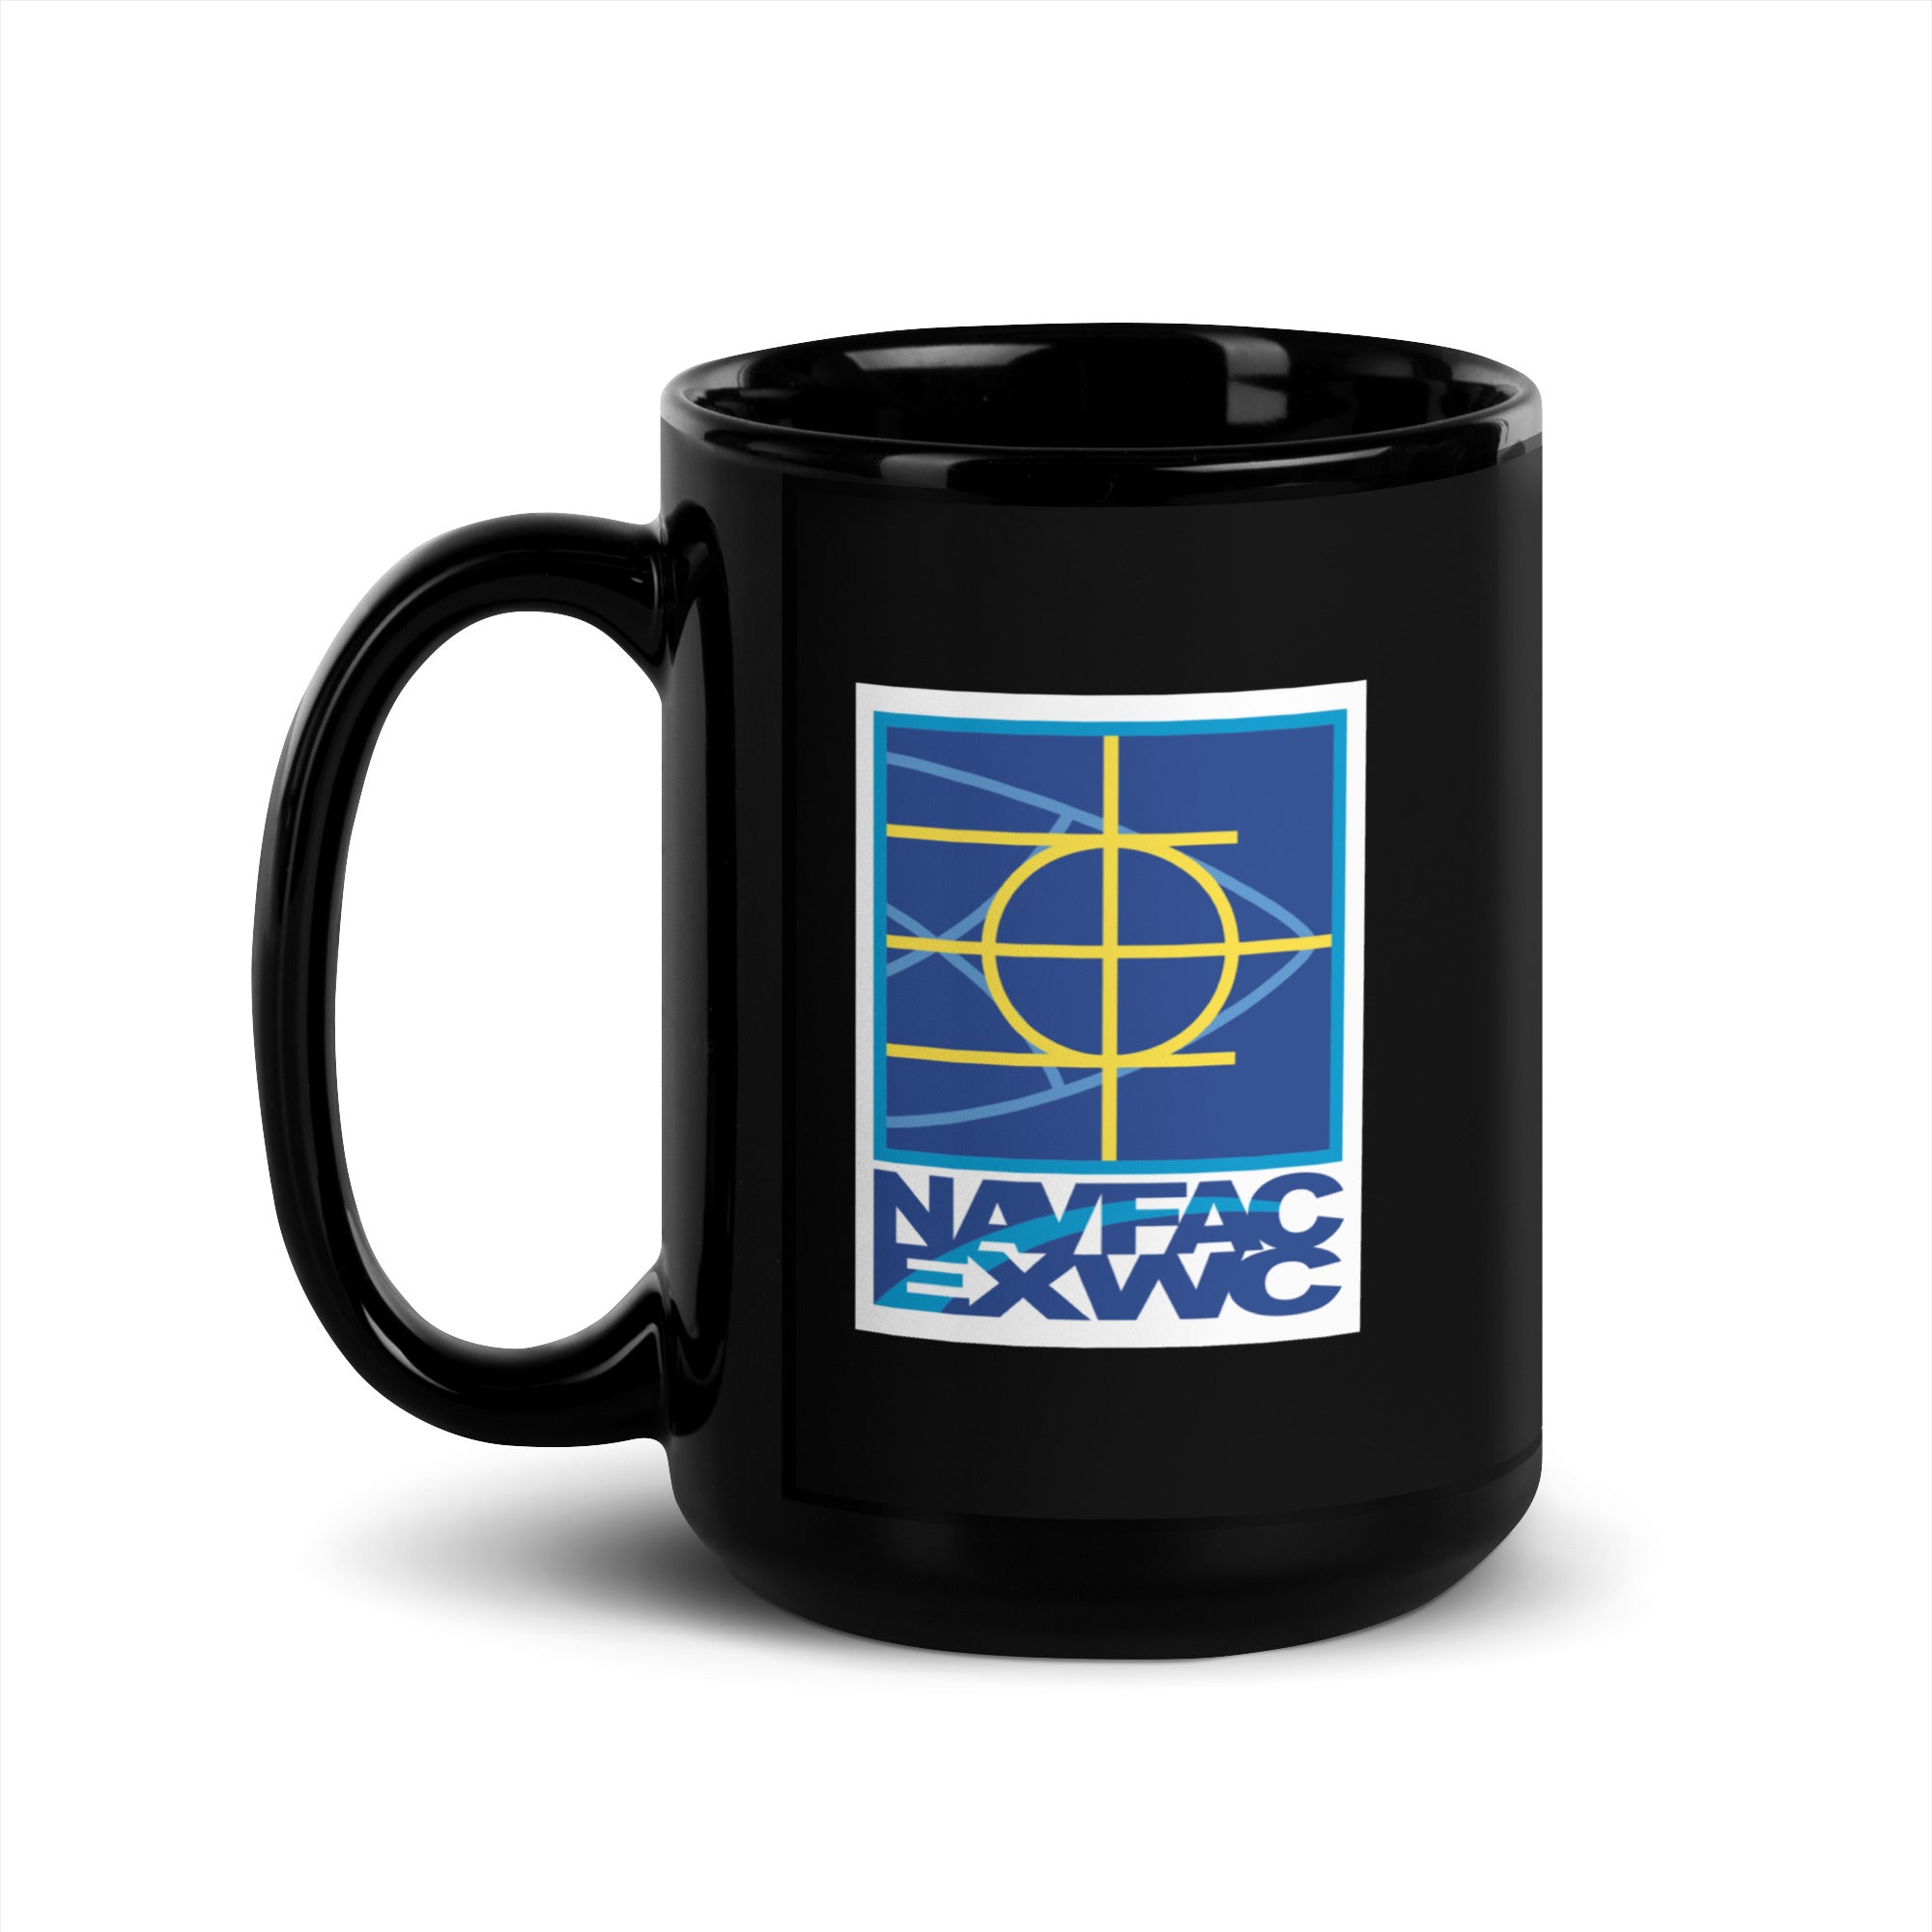 Black Glossy Mug | NAVFAC EXWC